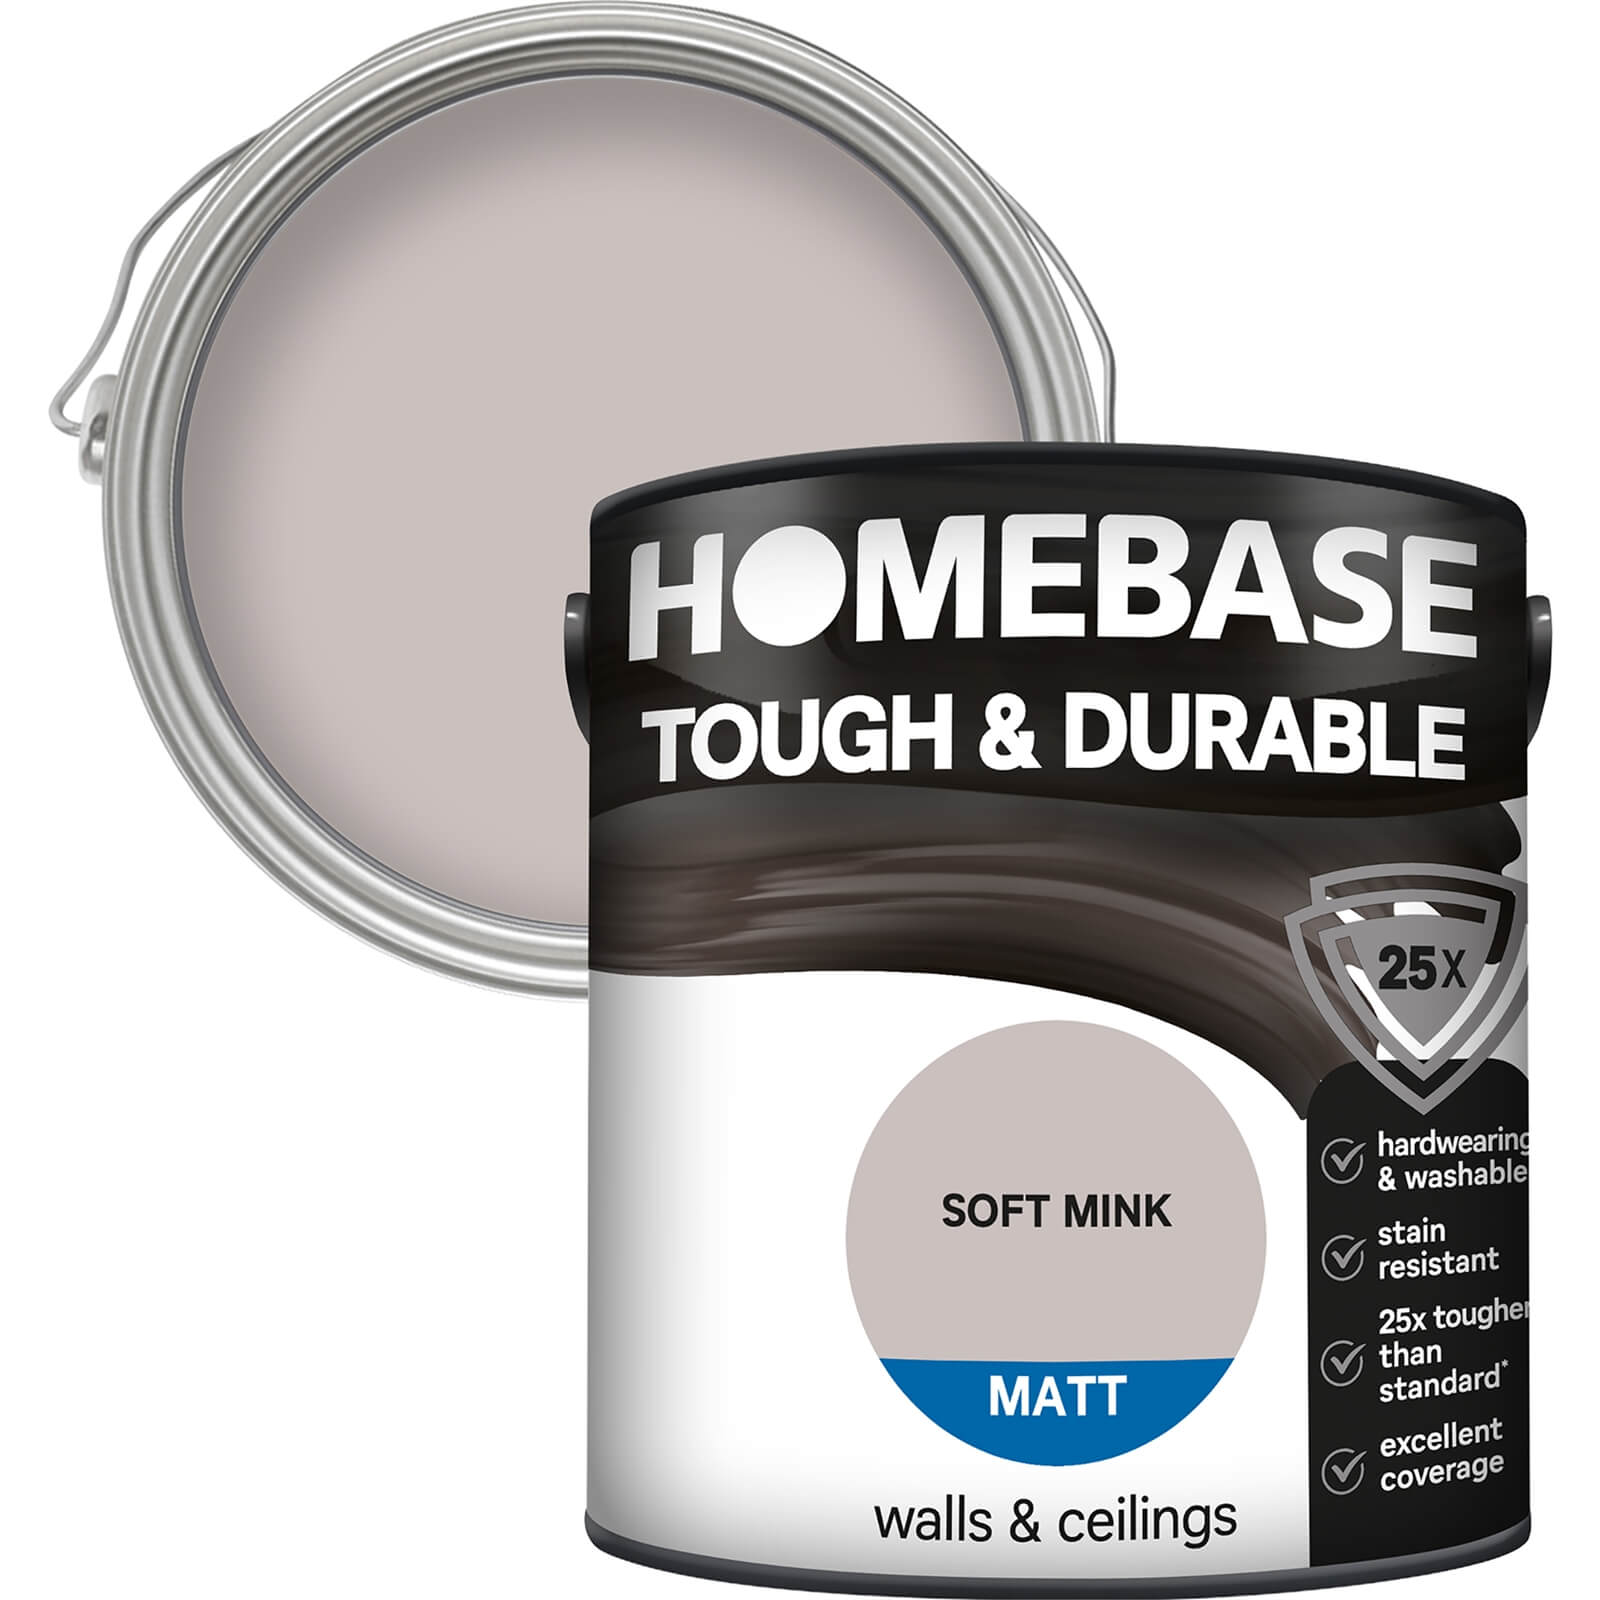 Homebase Tough & Durable Matt Paint Soft Mink - 2.5L